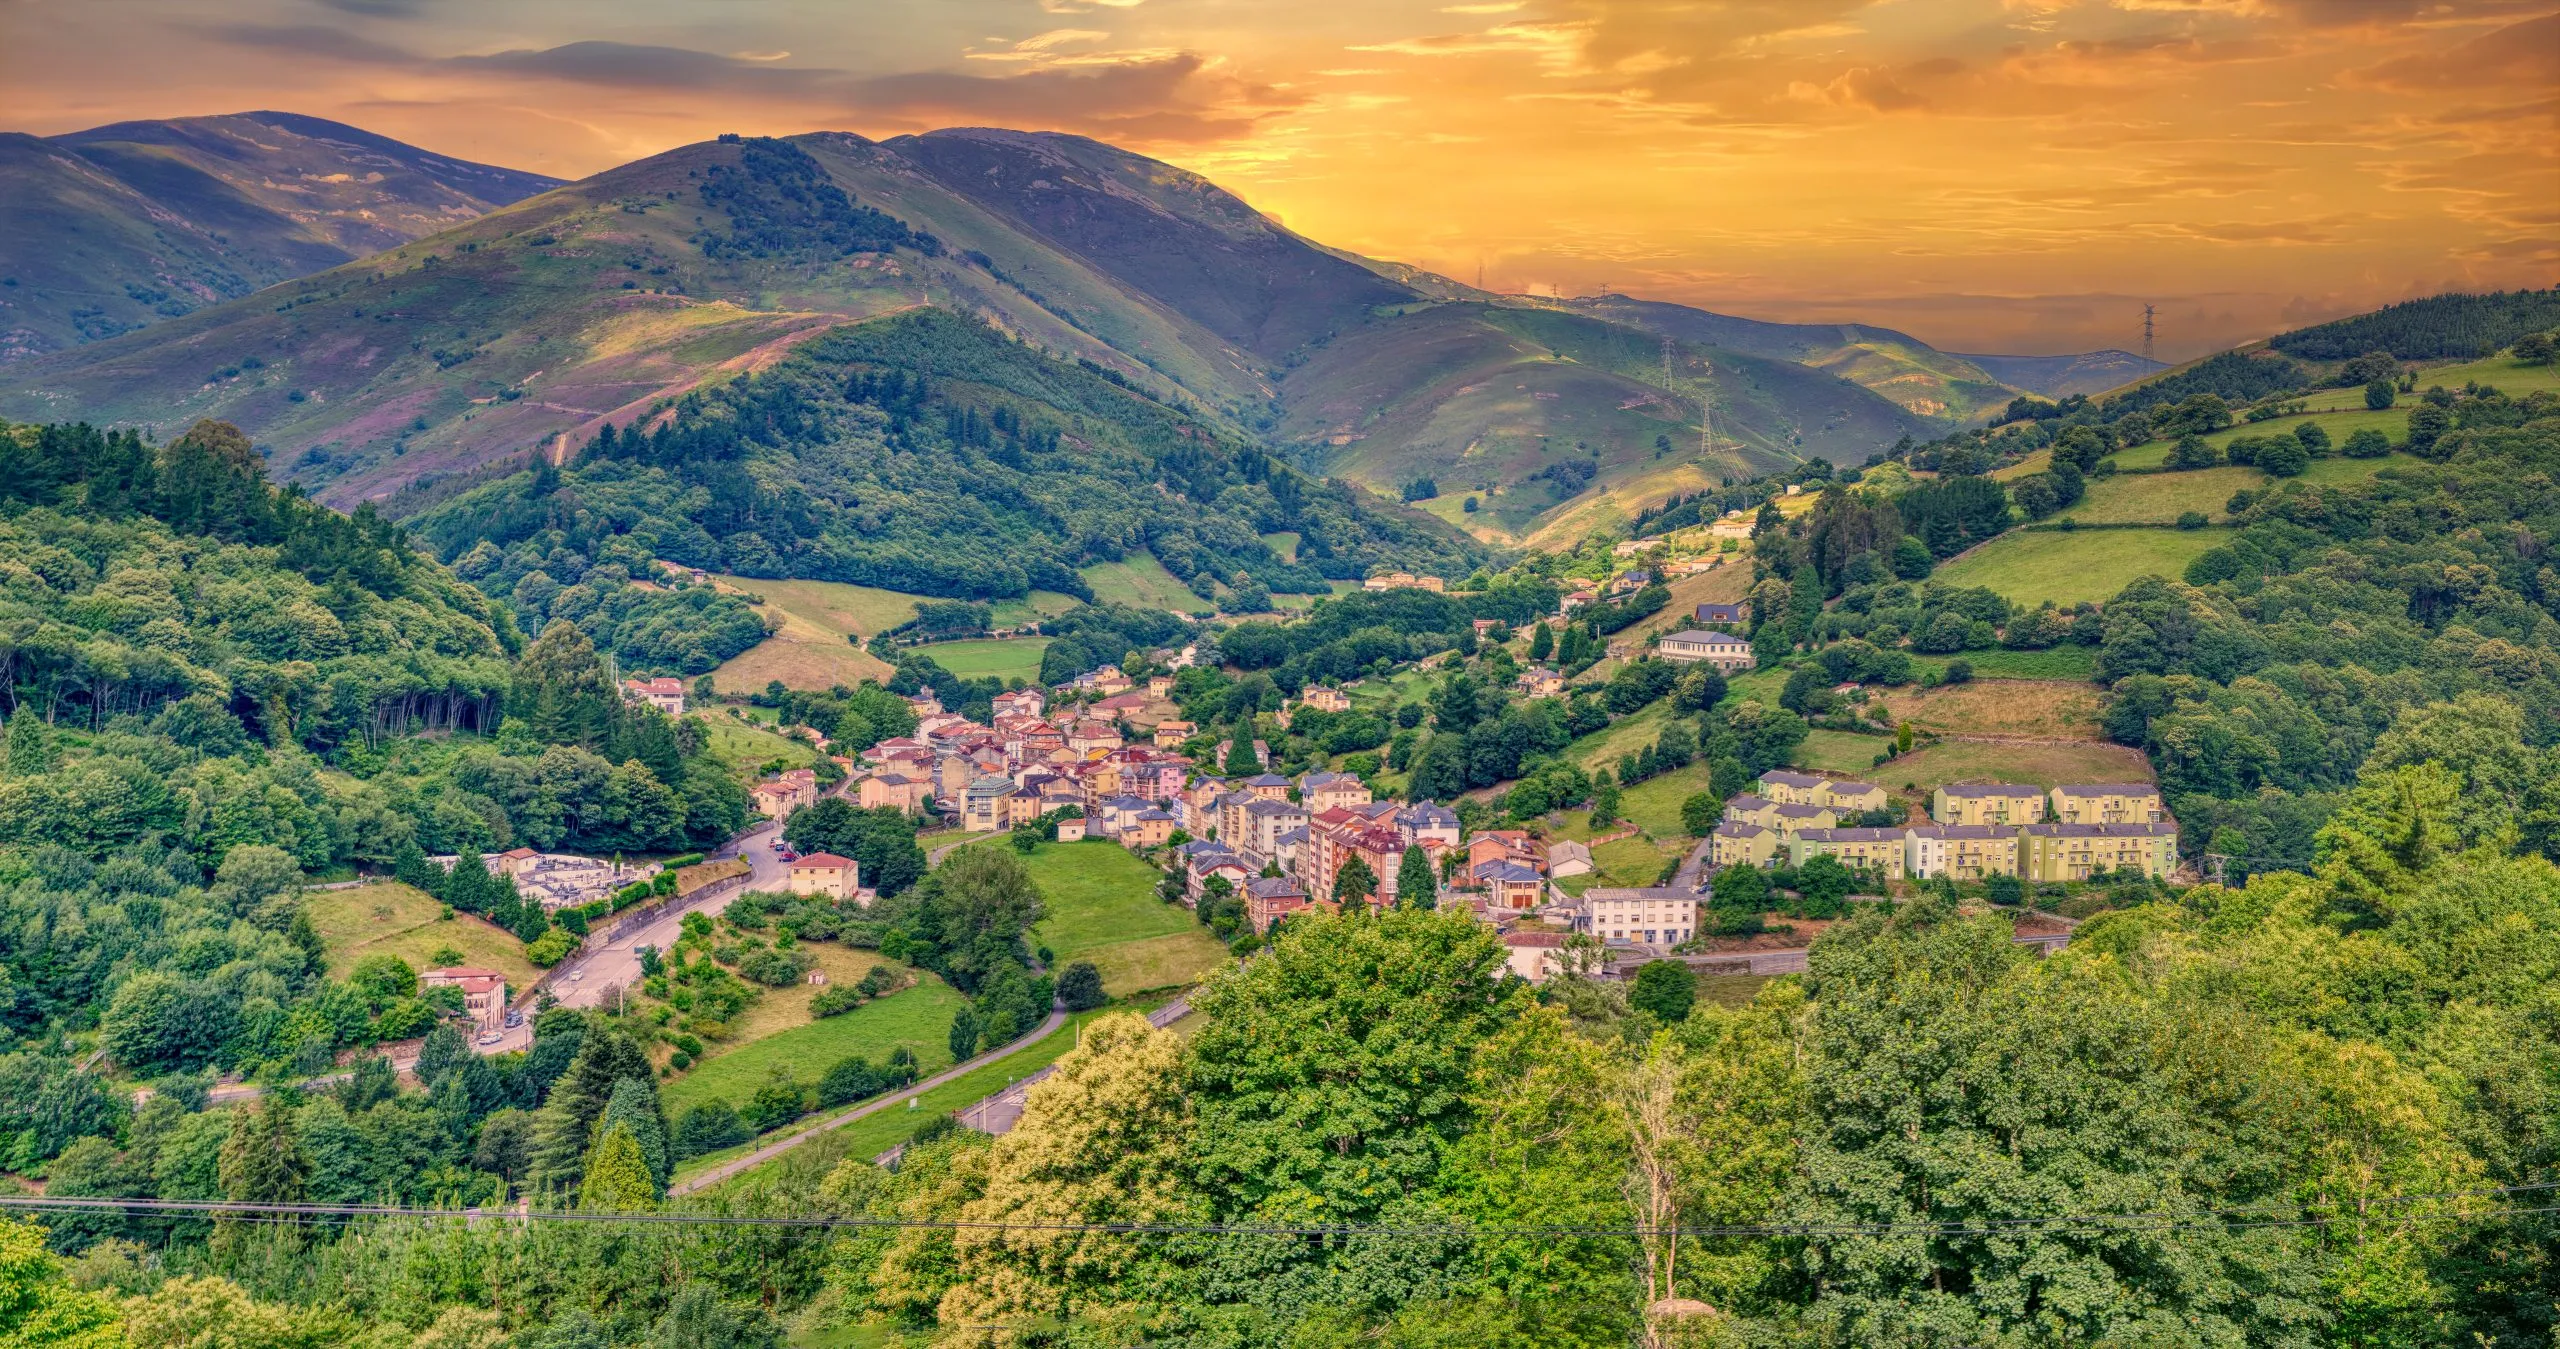 Panoramic view of Pola de Allande in Asturias, Spain.